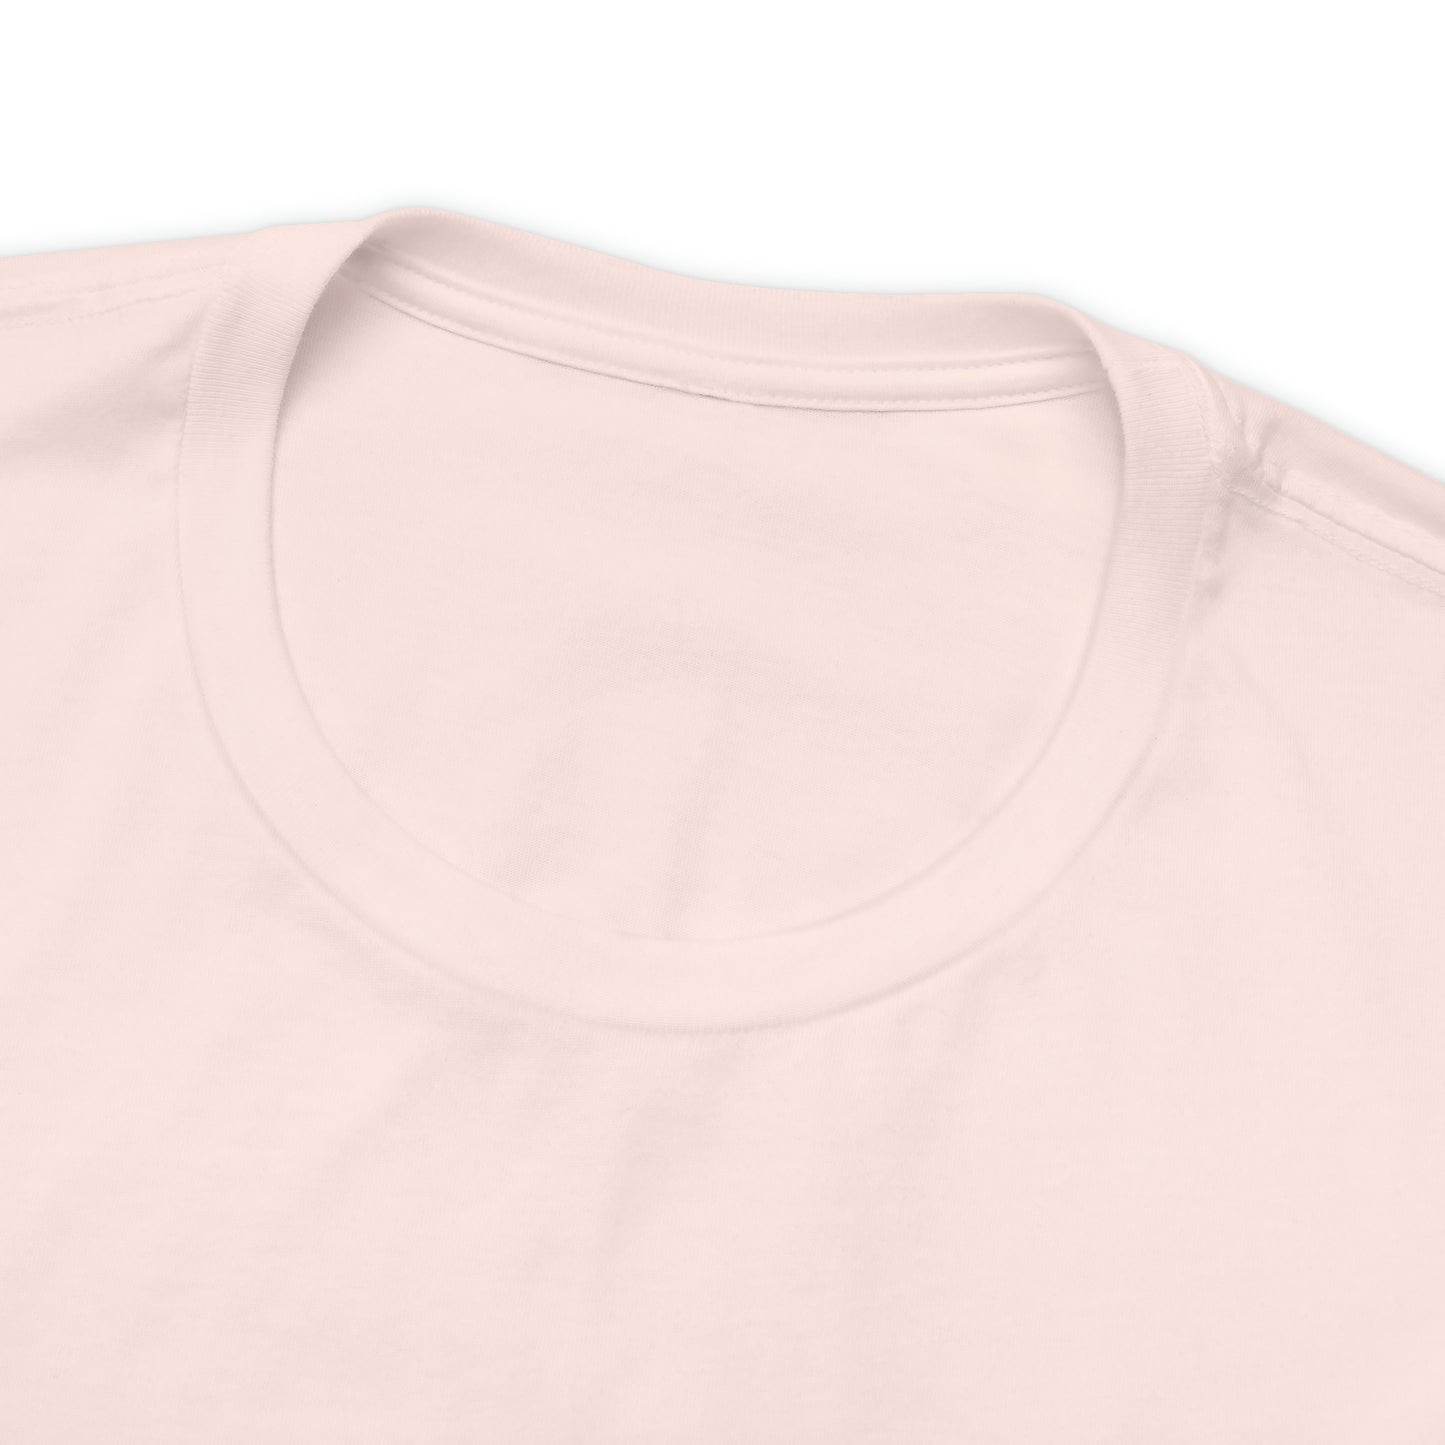 Jersey T-shirt - Unisex - "Positive D+" Collection (350)